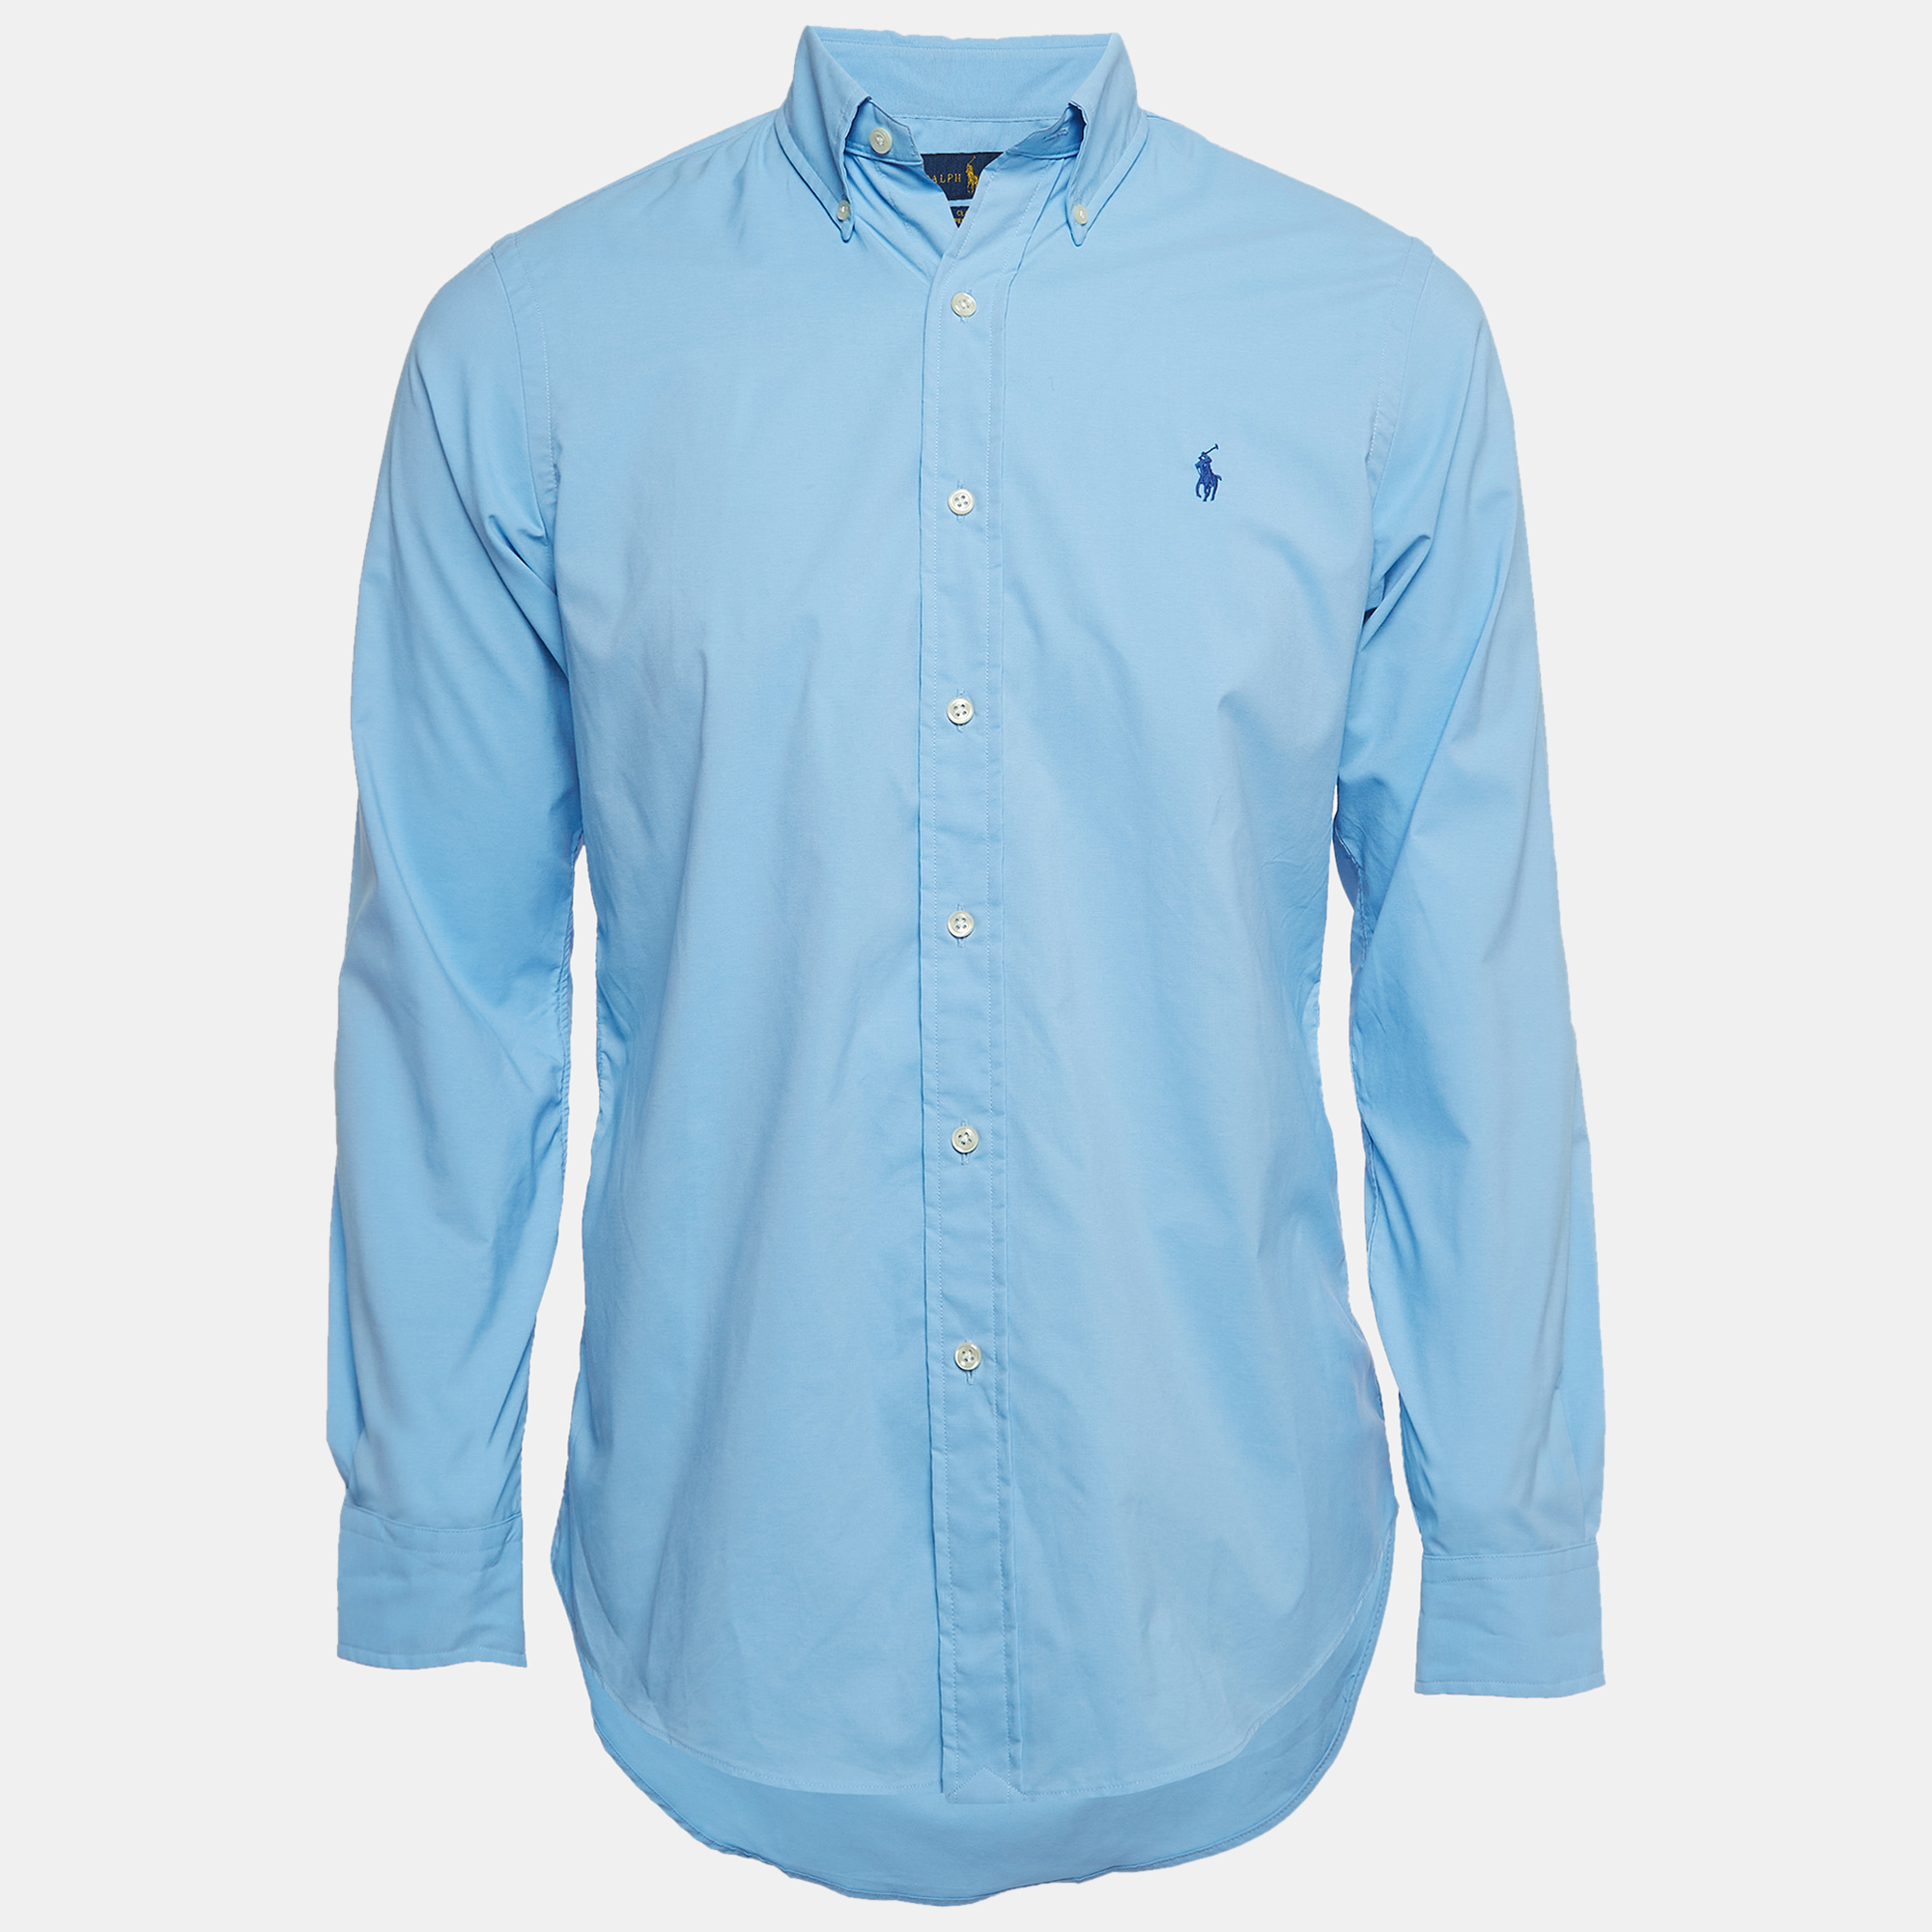 Polo ralph lauren blue logo embroidered poplin slim fit shirt s